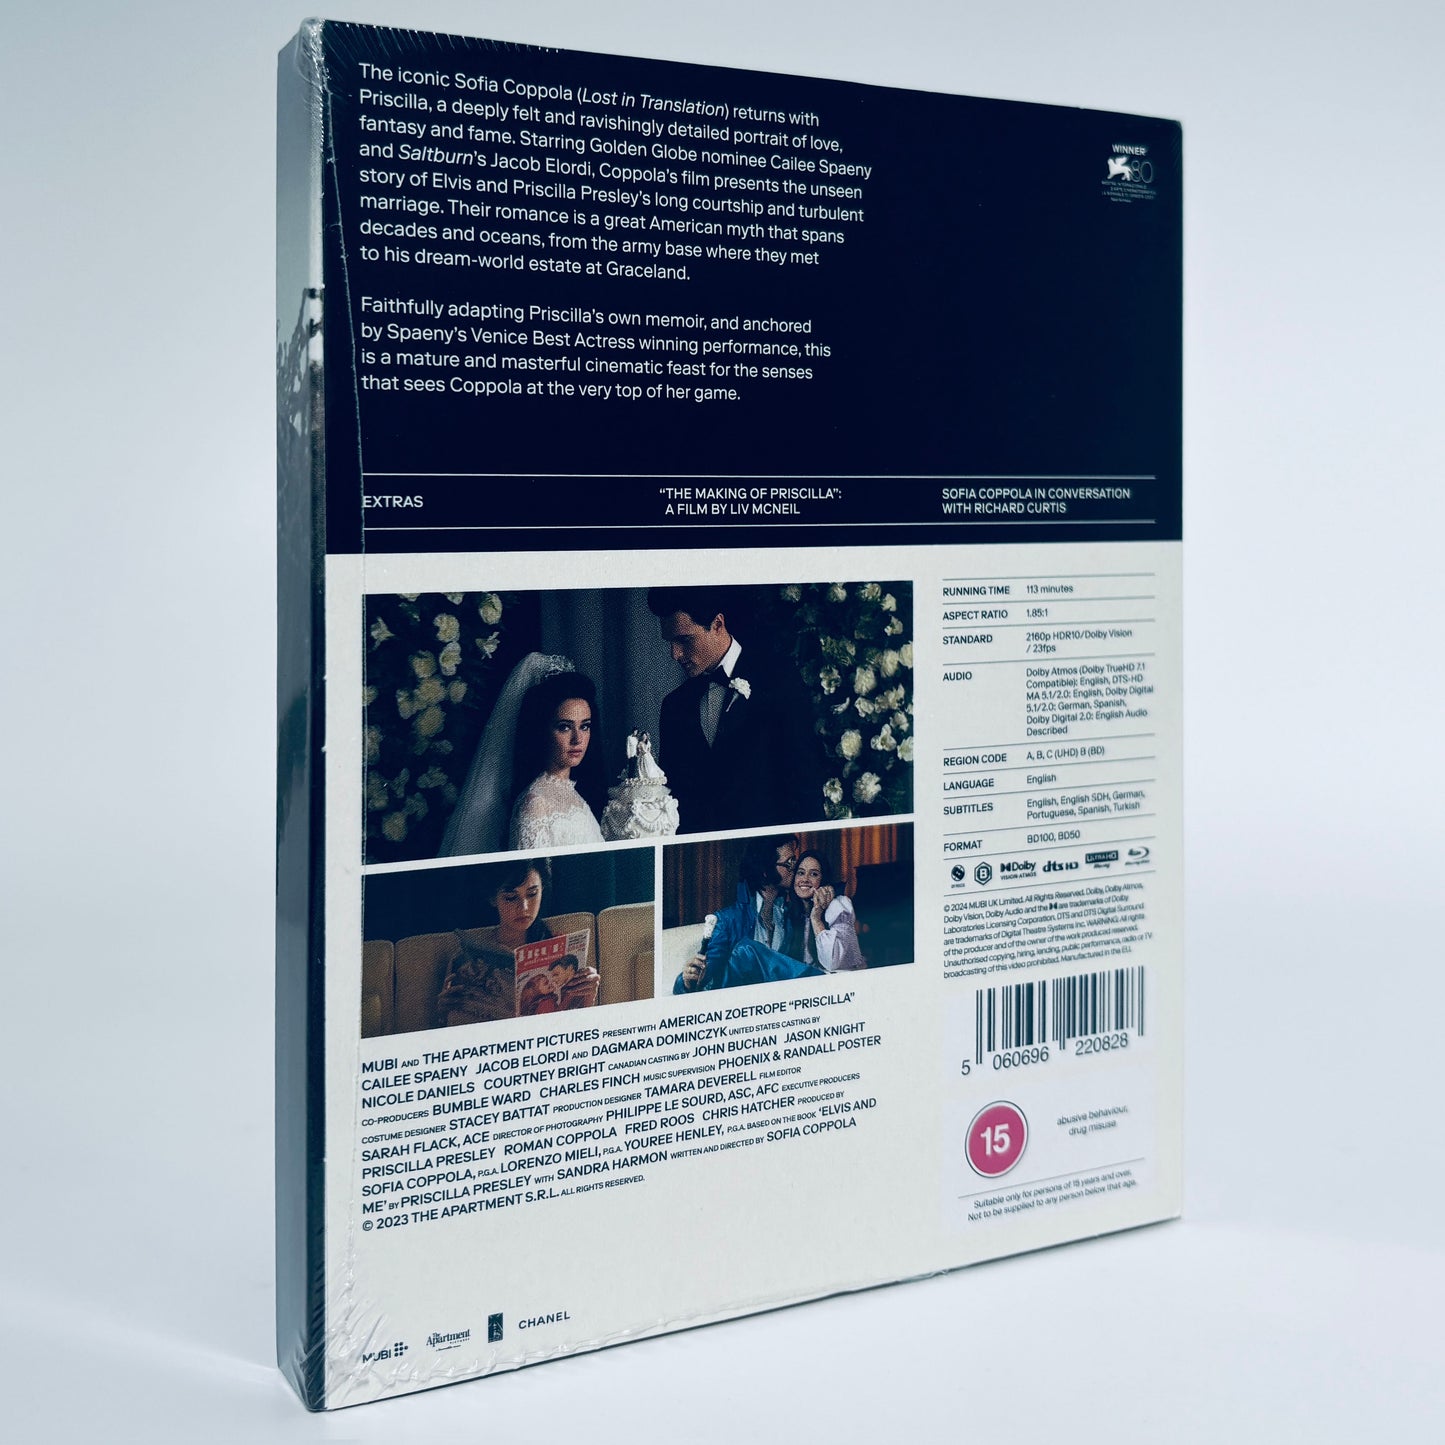 Priscilla 4K Ultra HD Blu-ray Sofia Coppola Elvis Cailee Spaeny UHD Mubi